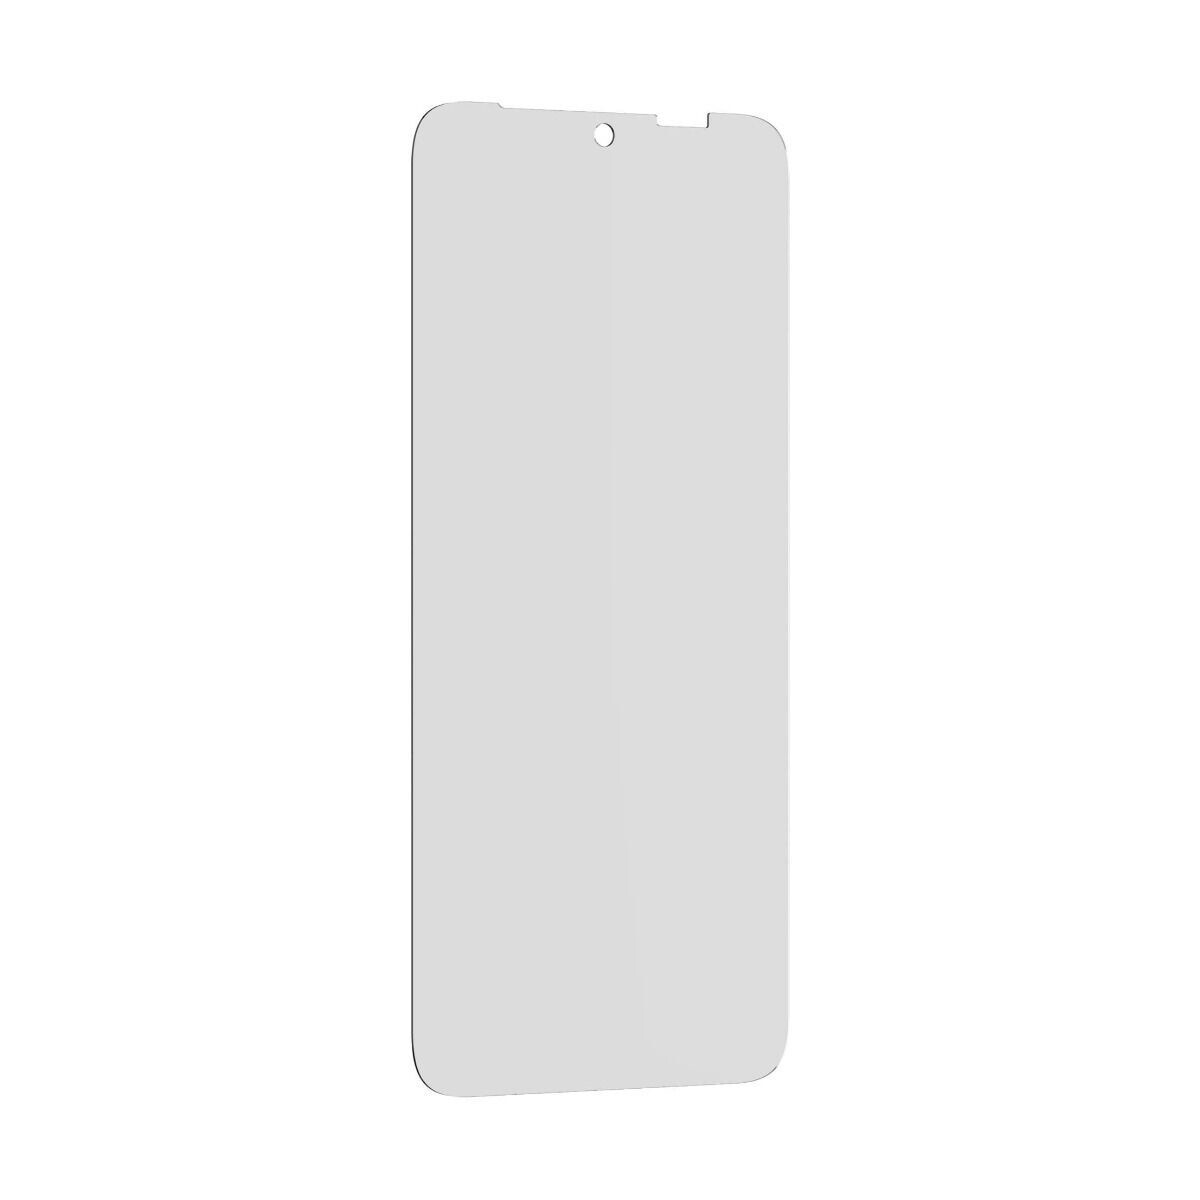 Fairphone F4PRTC-1BL-WW1 - Anti-glare screen protector for Fairphone 4